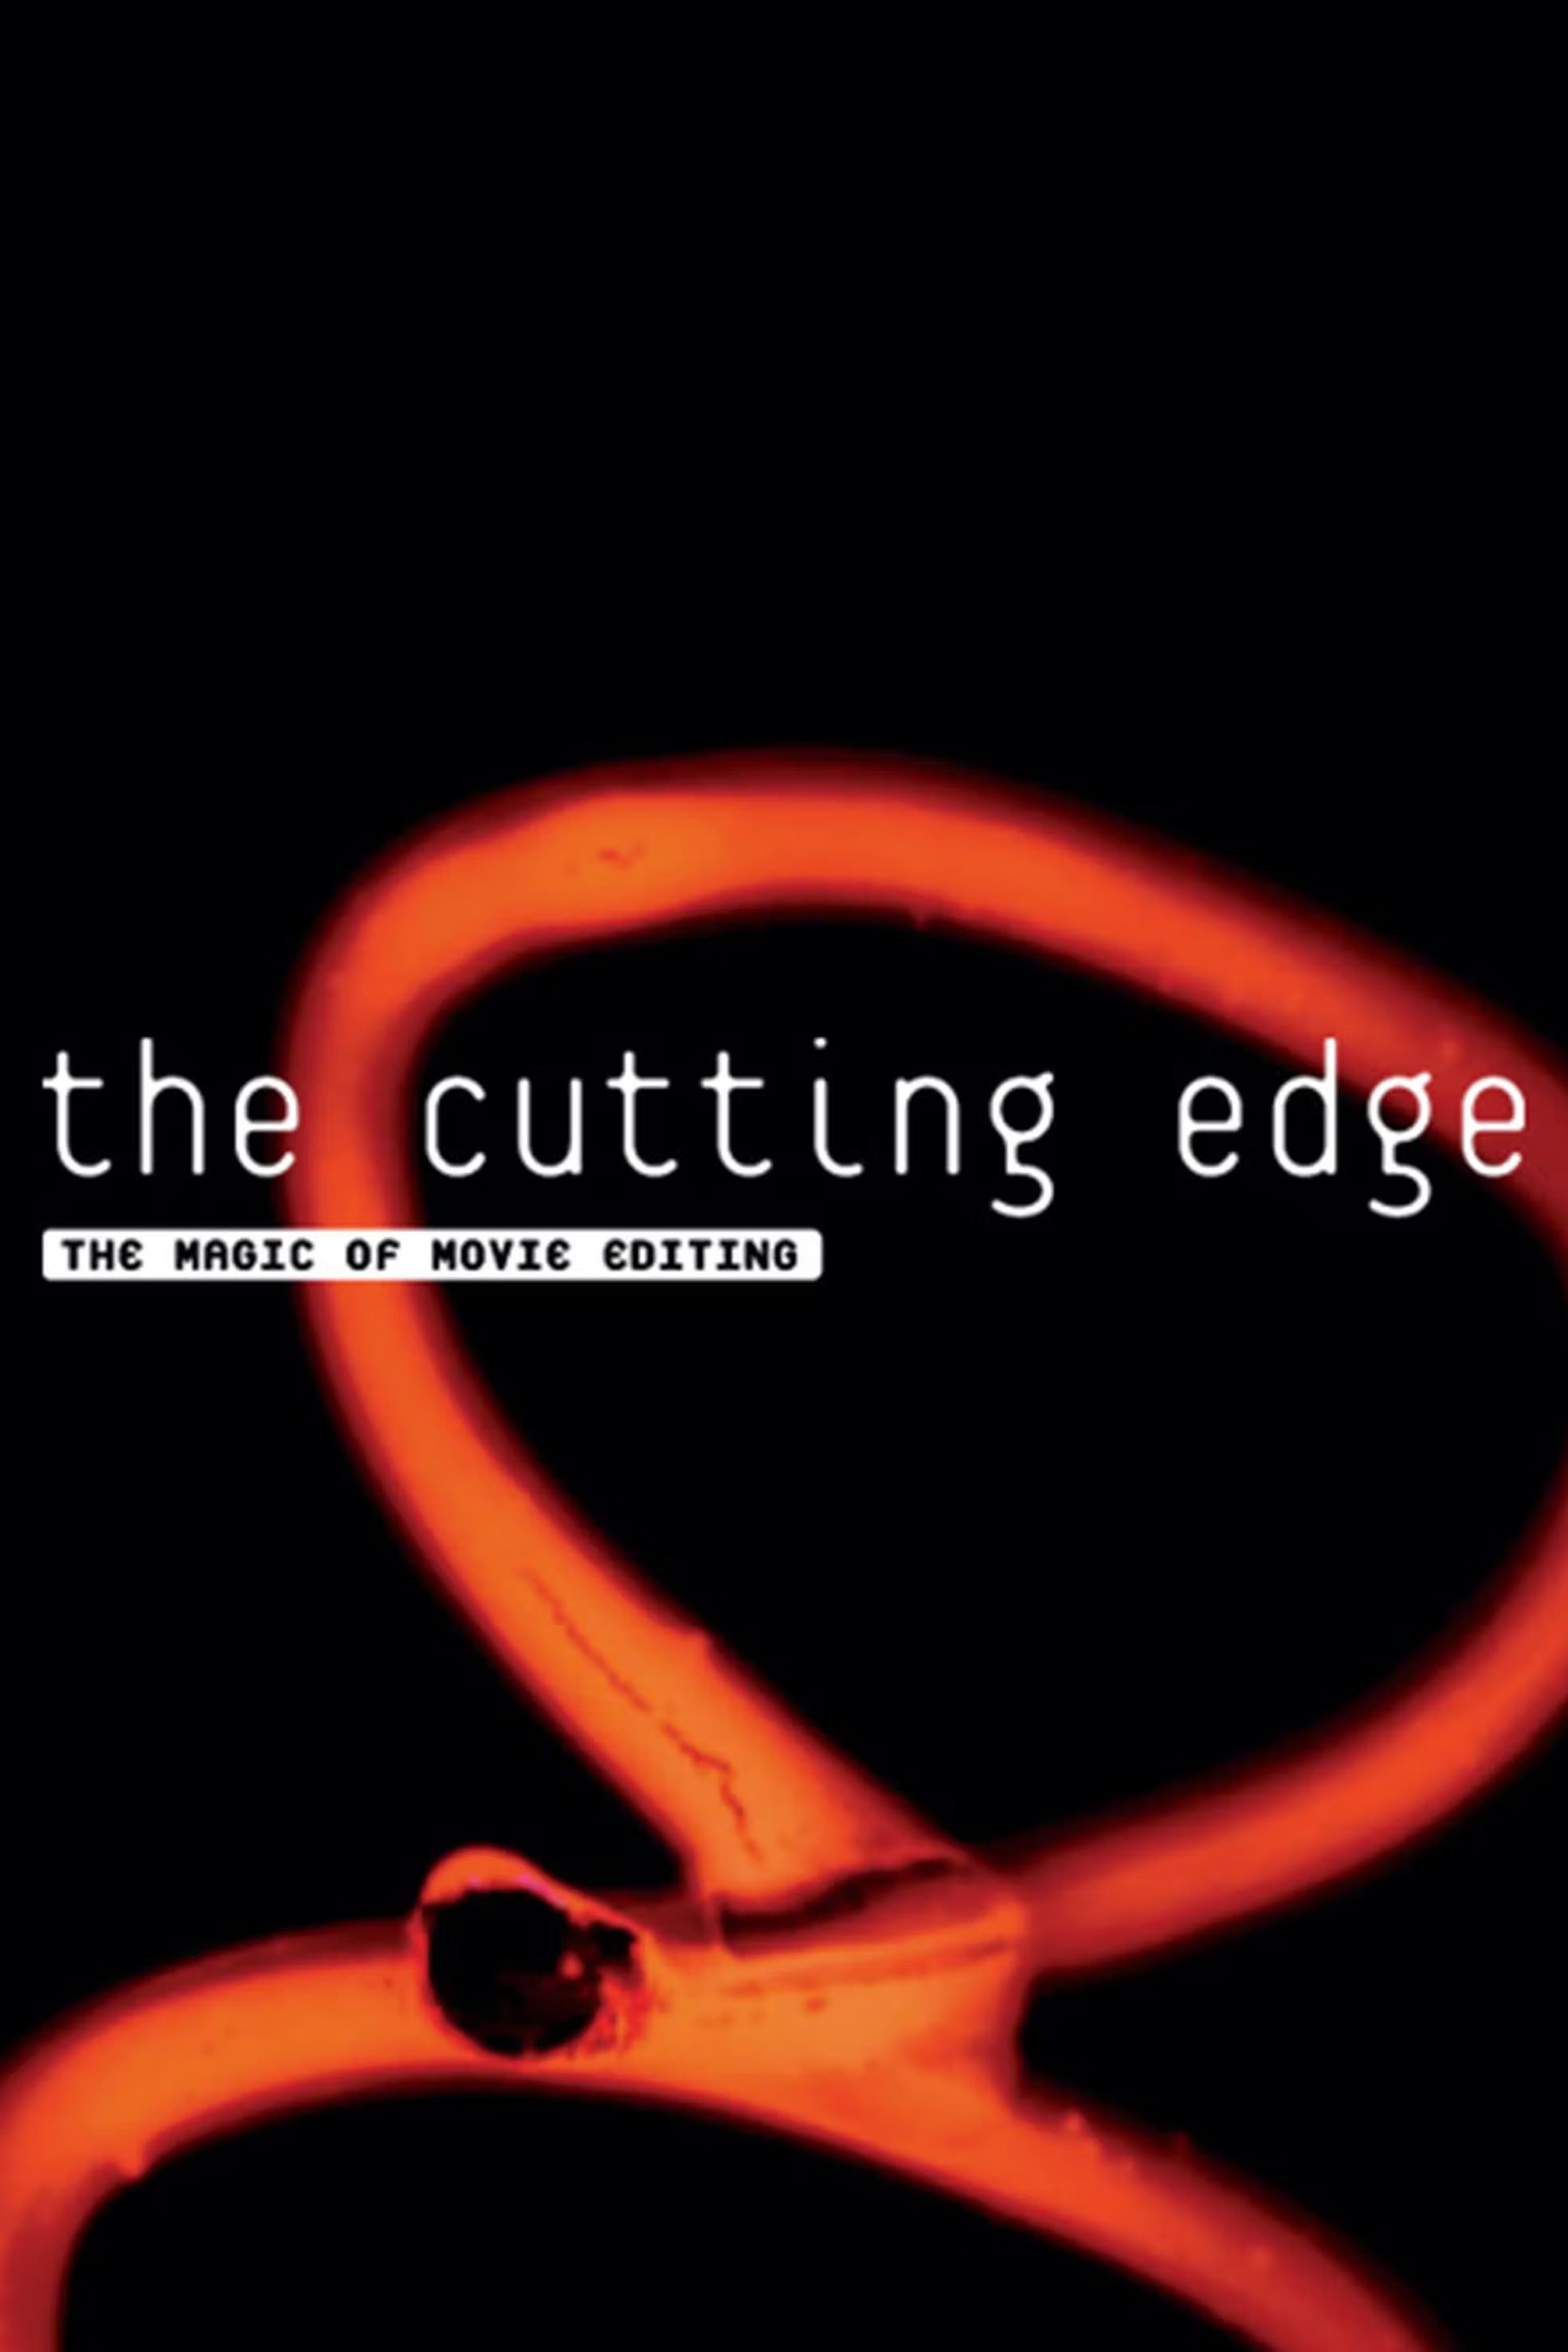 The Cutting Edge: The Magic of Movie Editing film